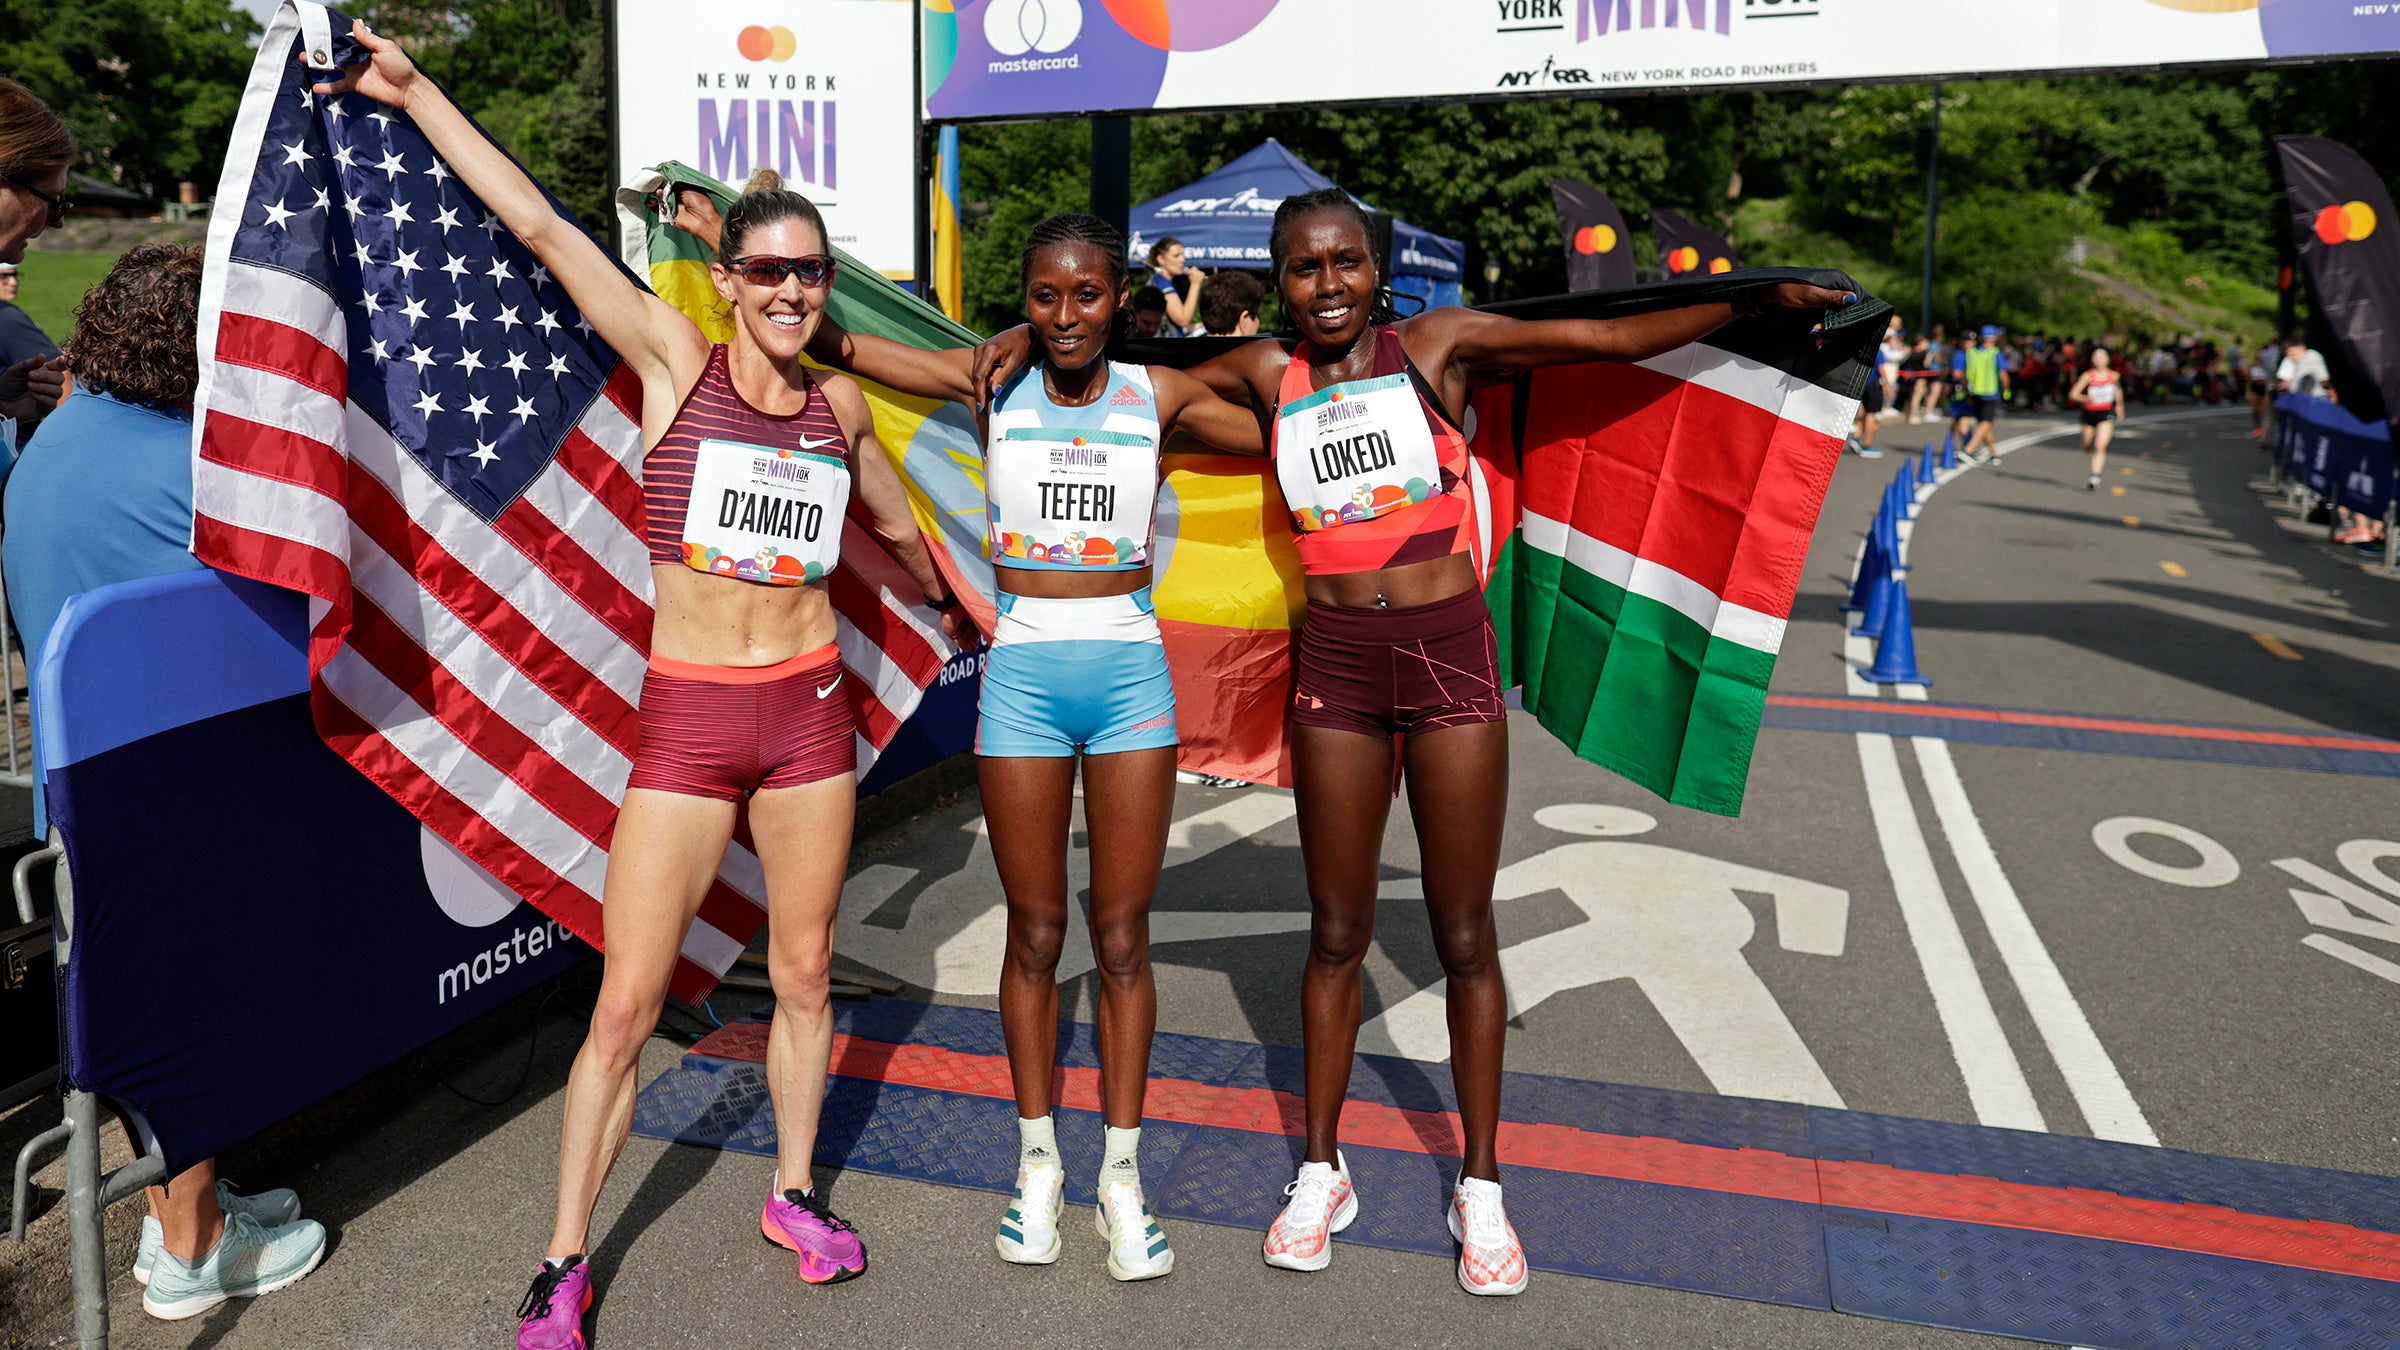 The New York Mini 10K Women's Race